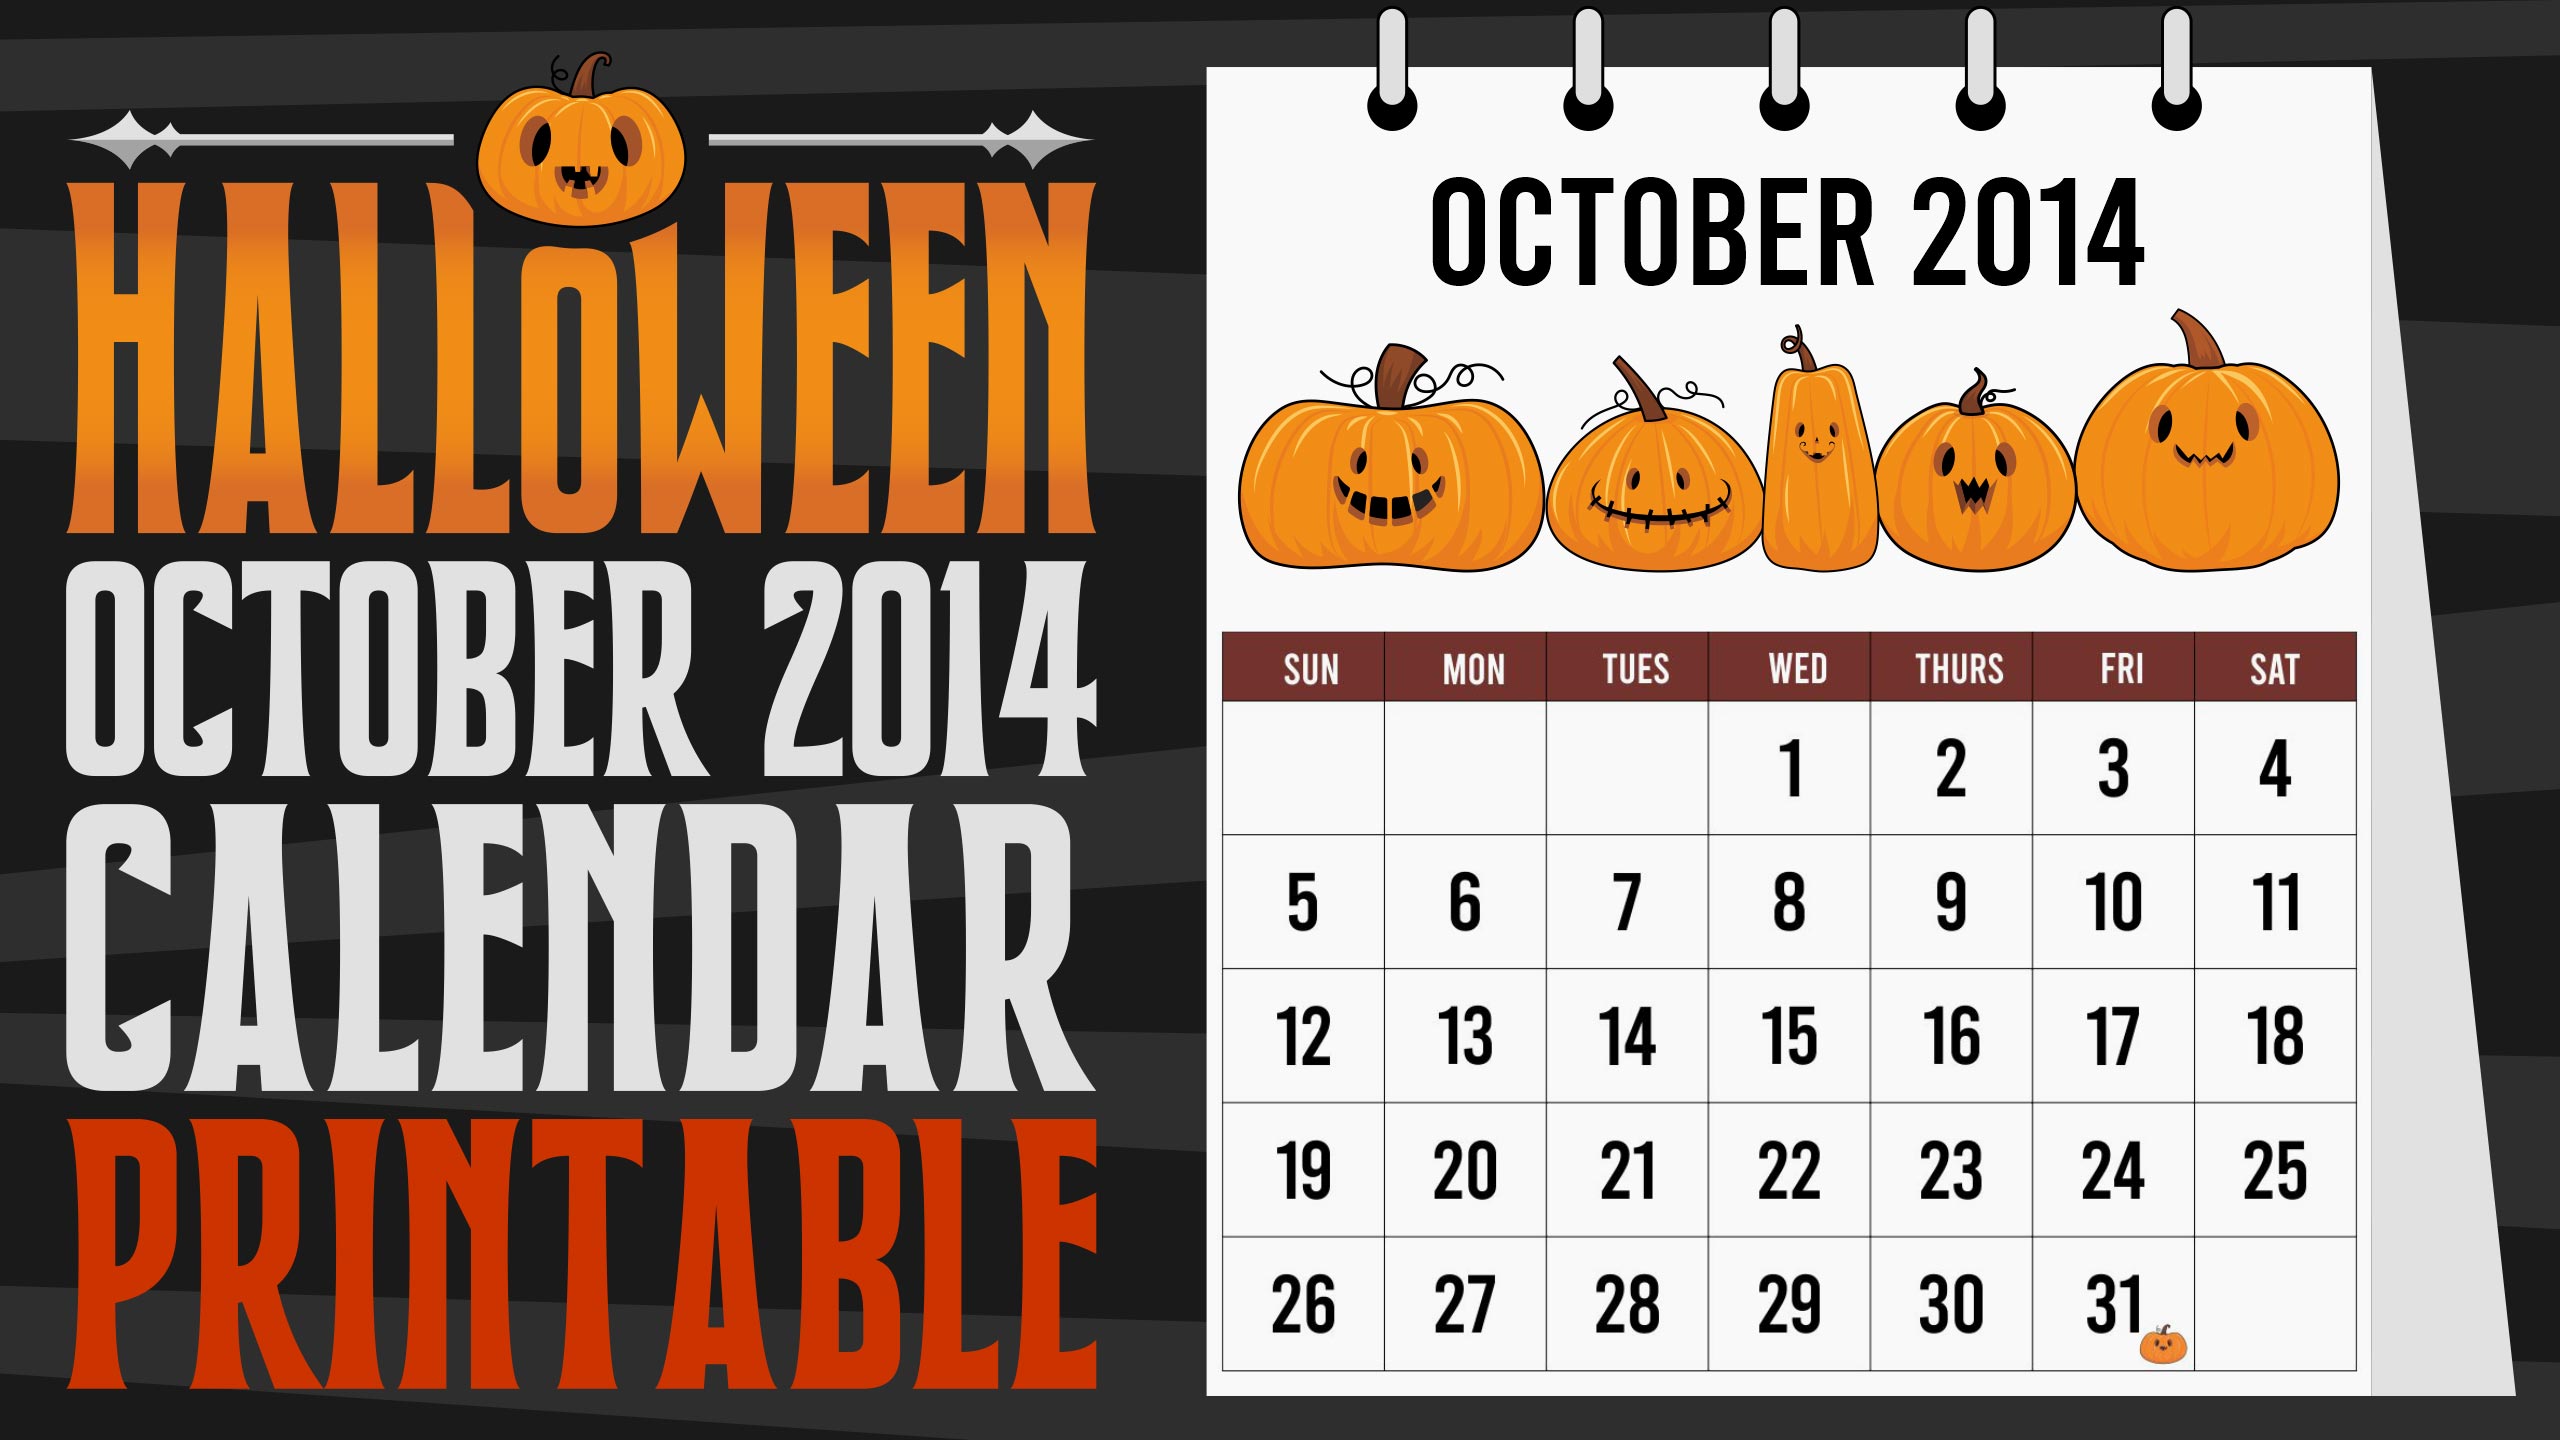 Halloween October 2014 Calendar Printable